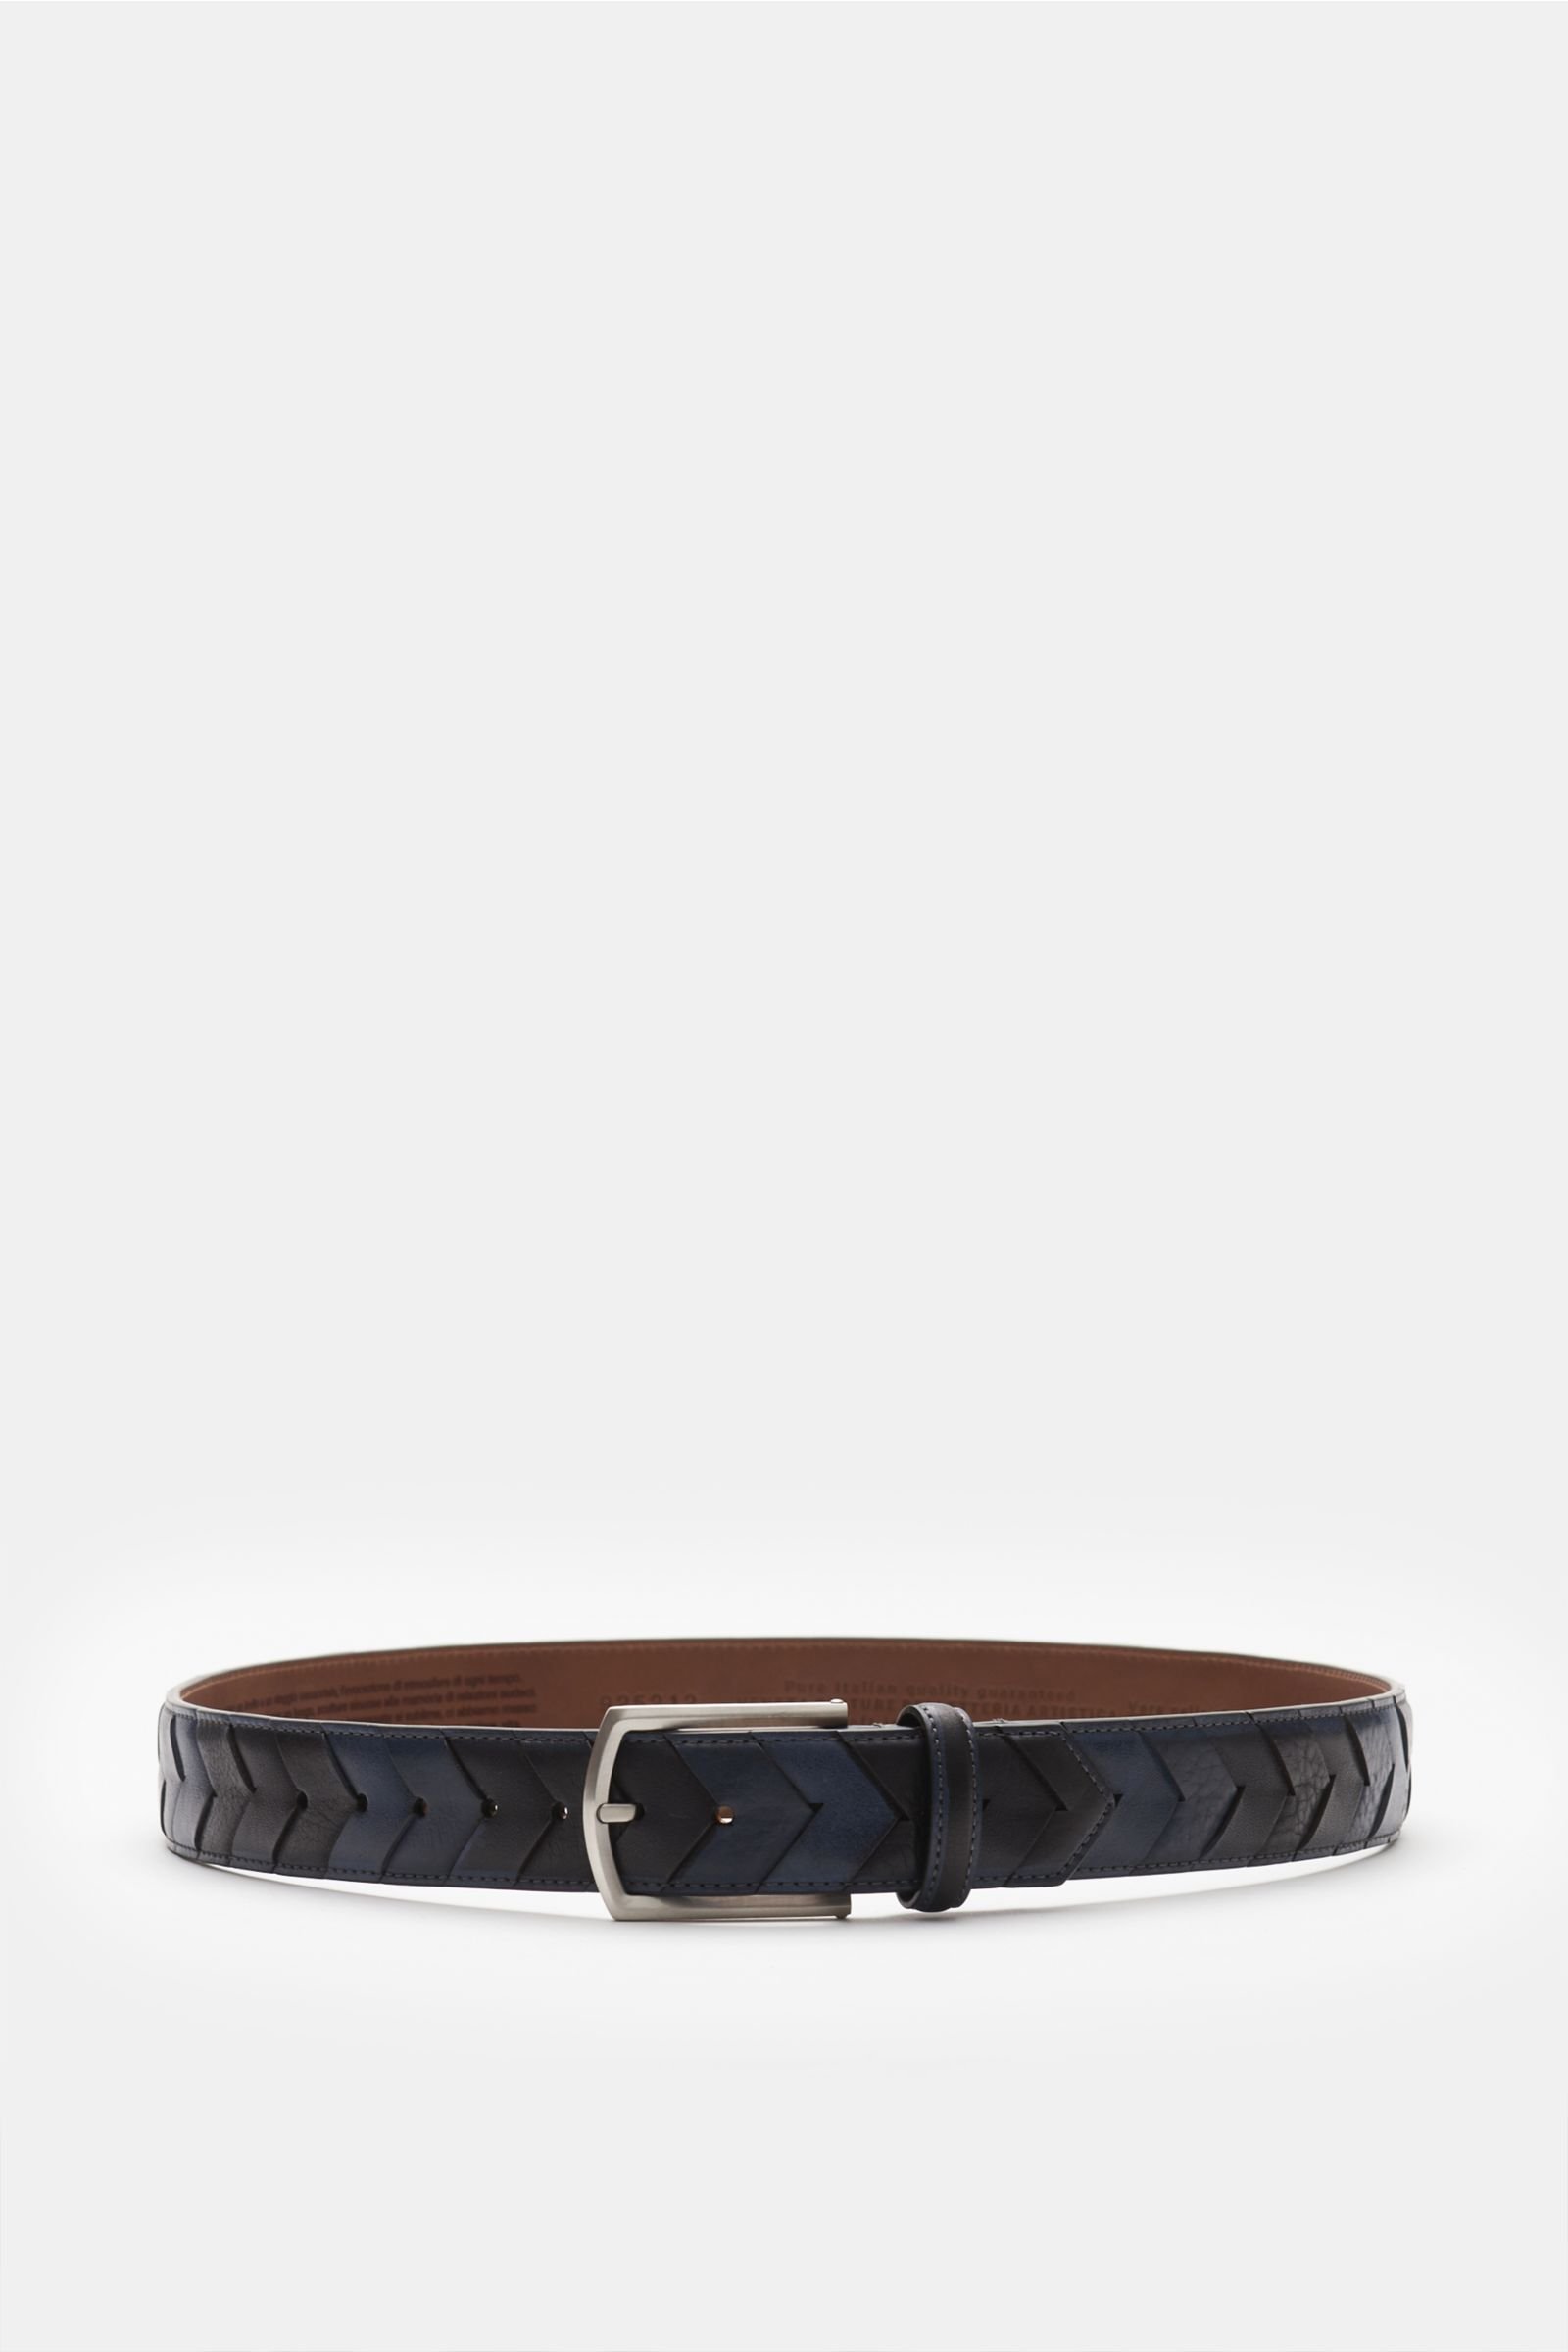 Plaited belt black/navy